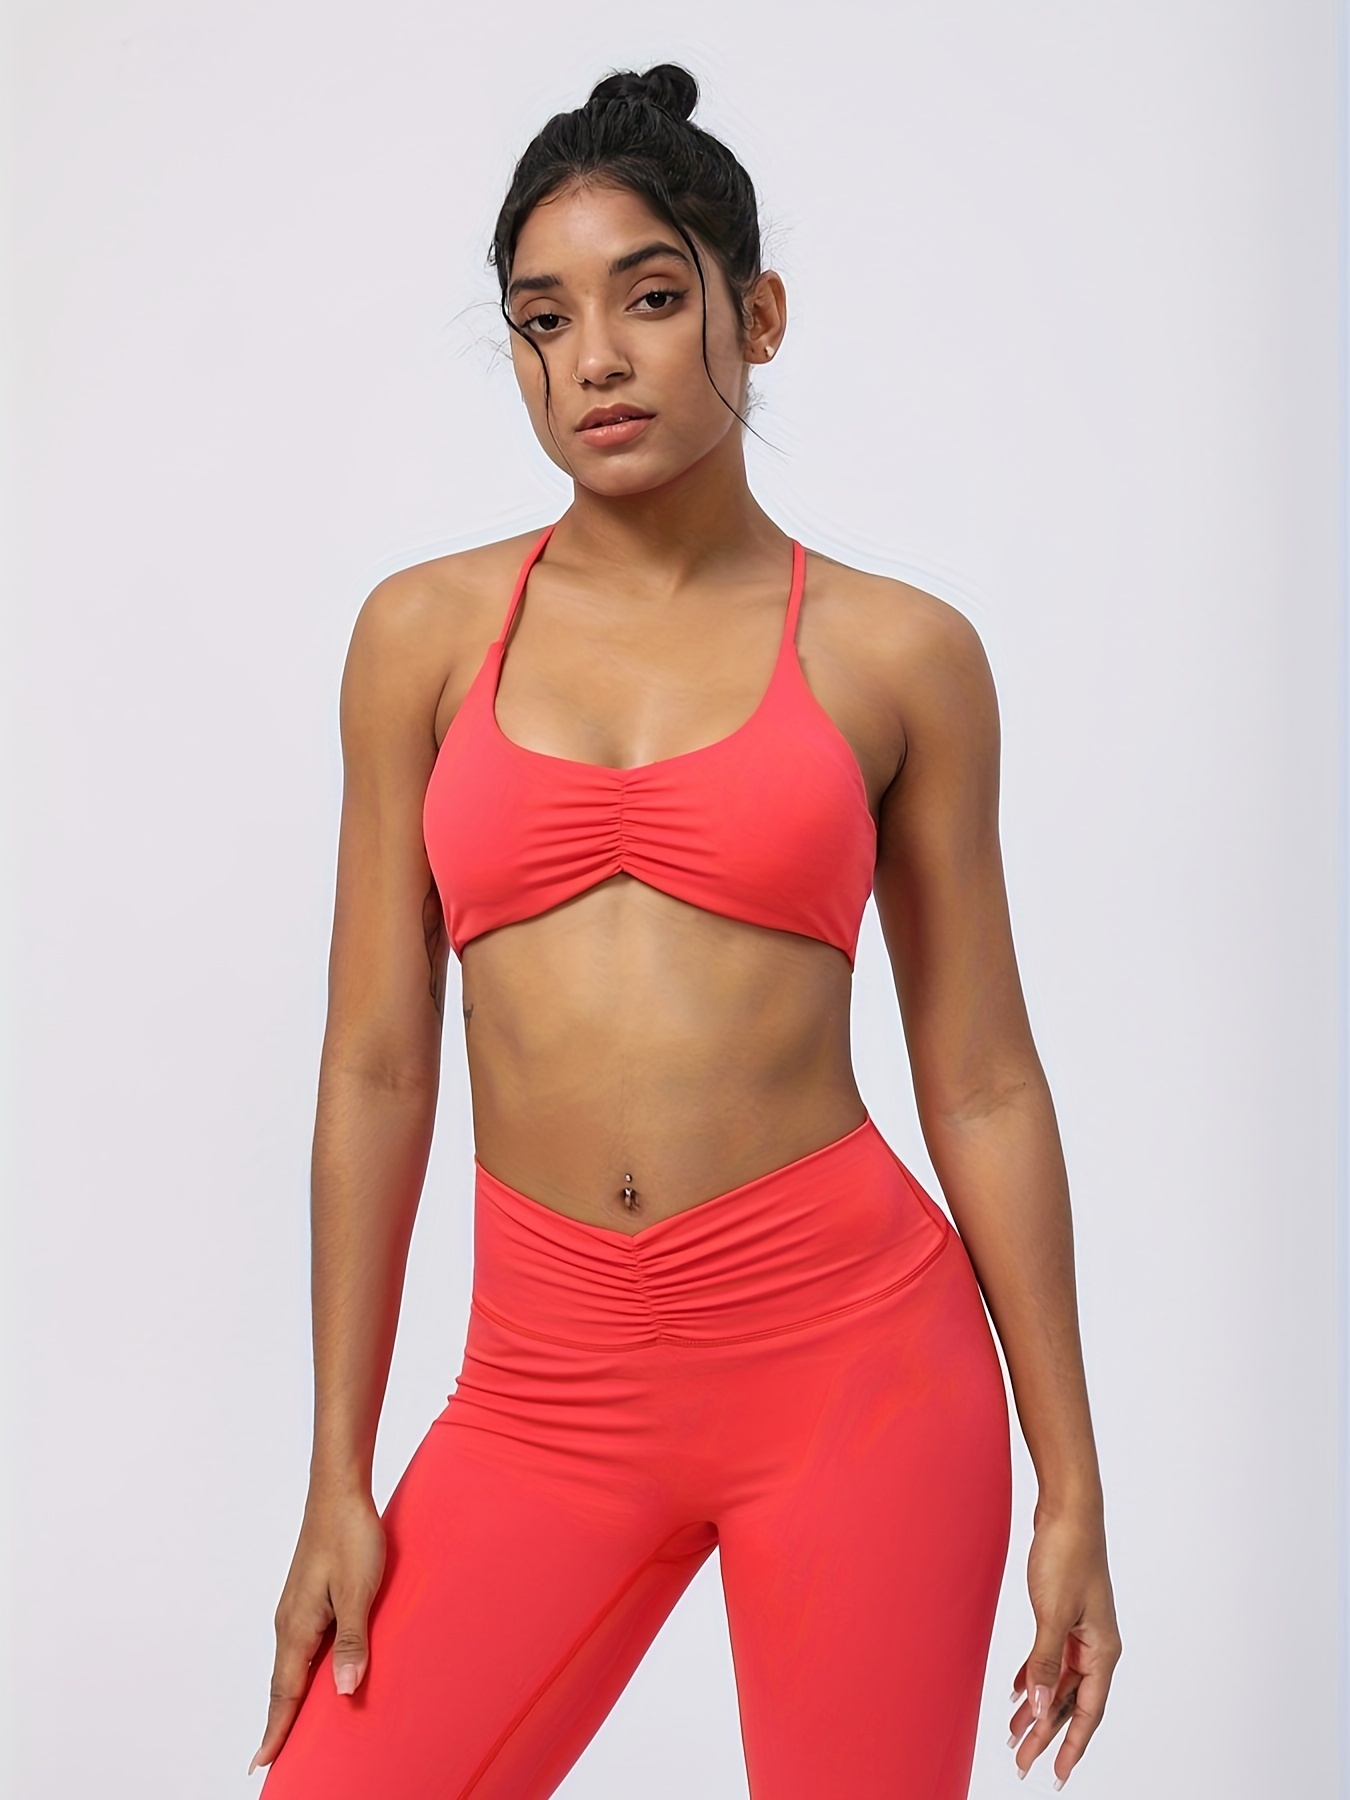  Yoga Sports Bra for Women Spaghetti Straps with Y-Back